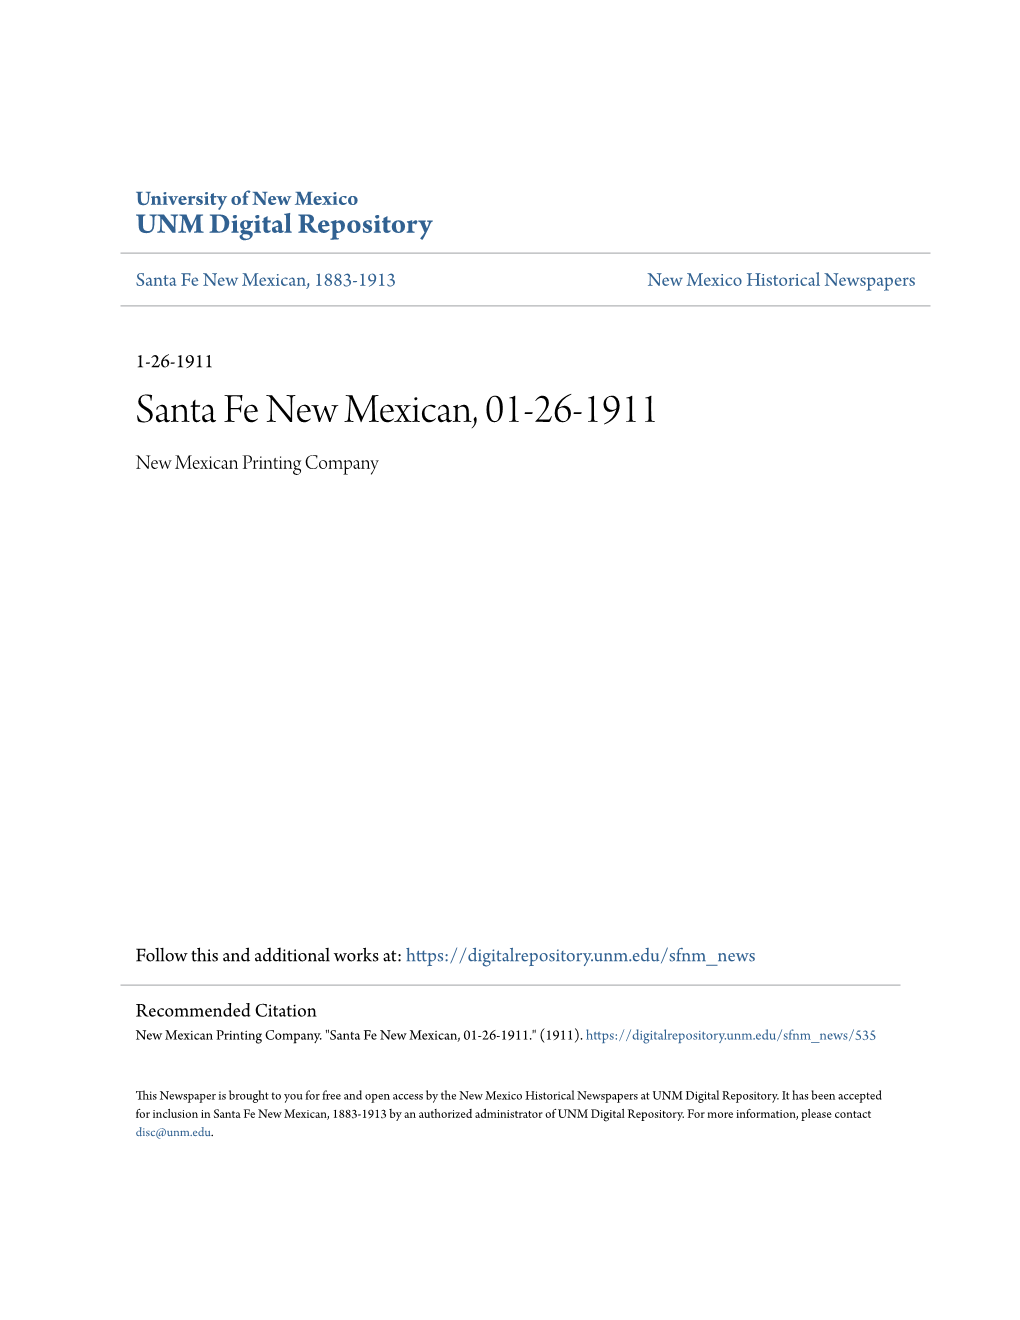 Santa Fe New Mexican, 01-26-1911 New Mexican Printing Company